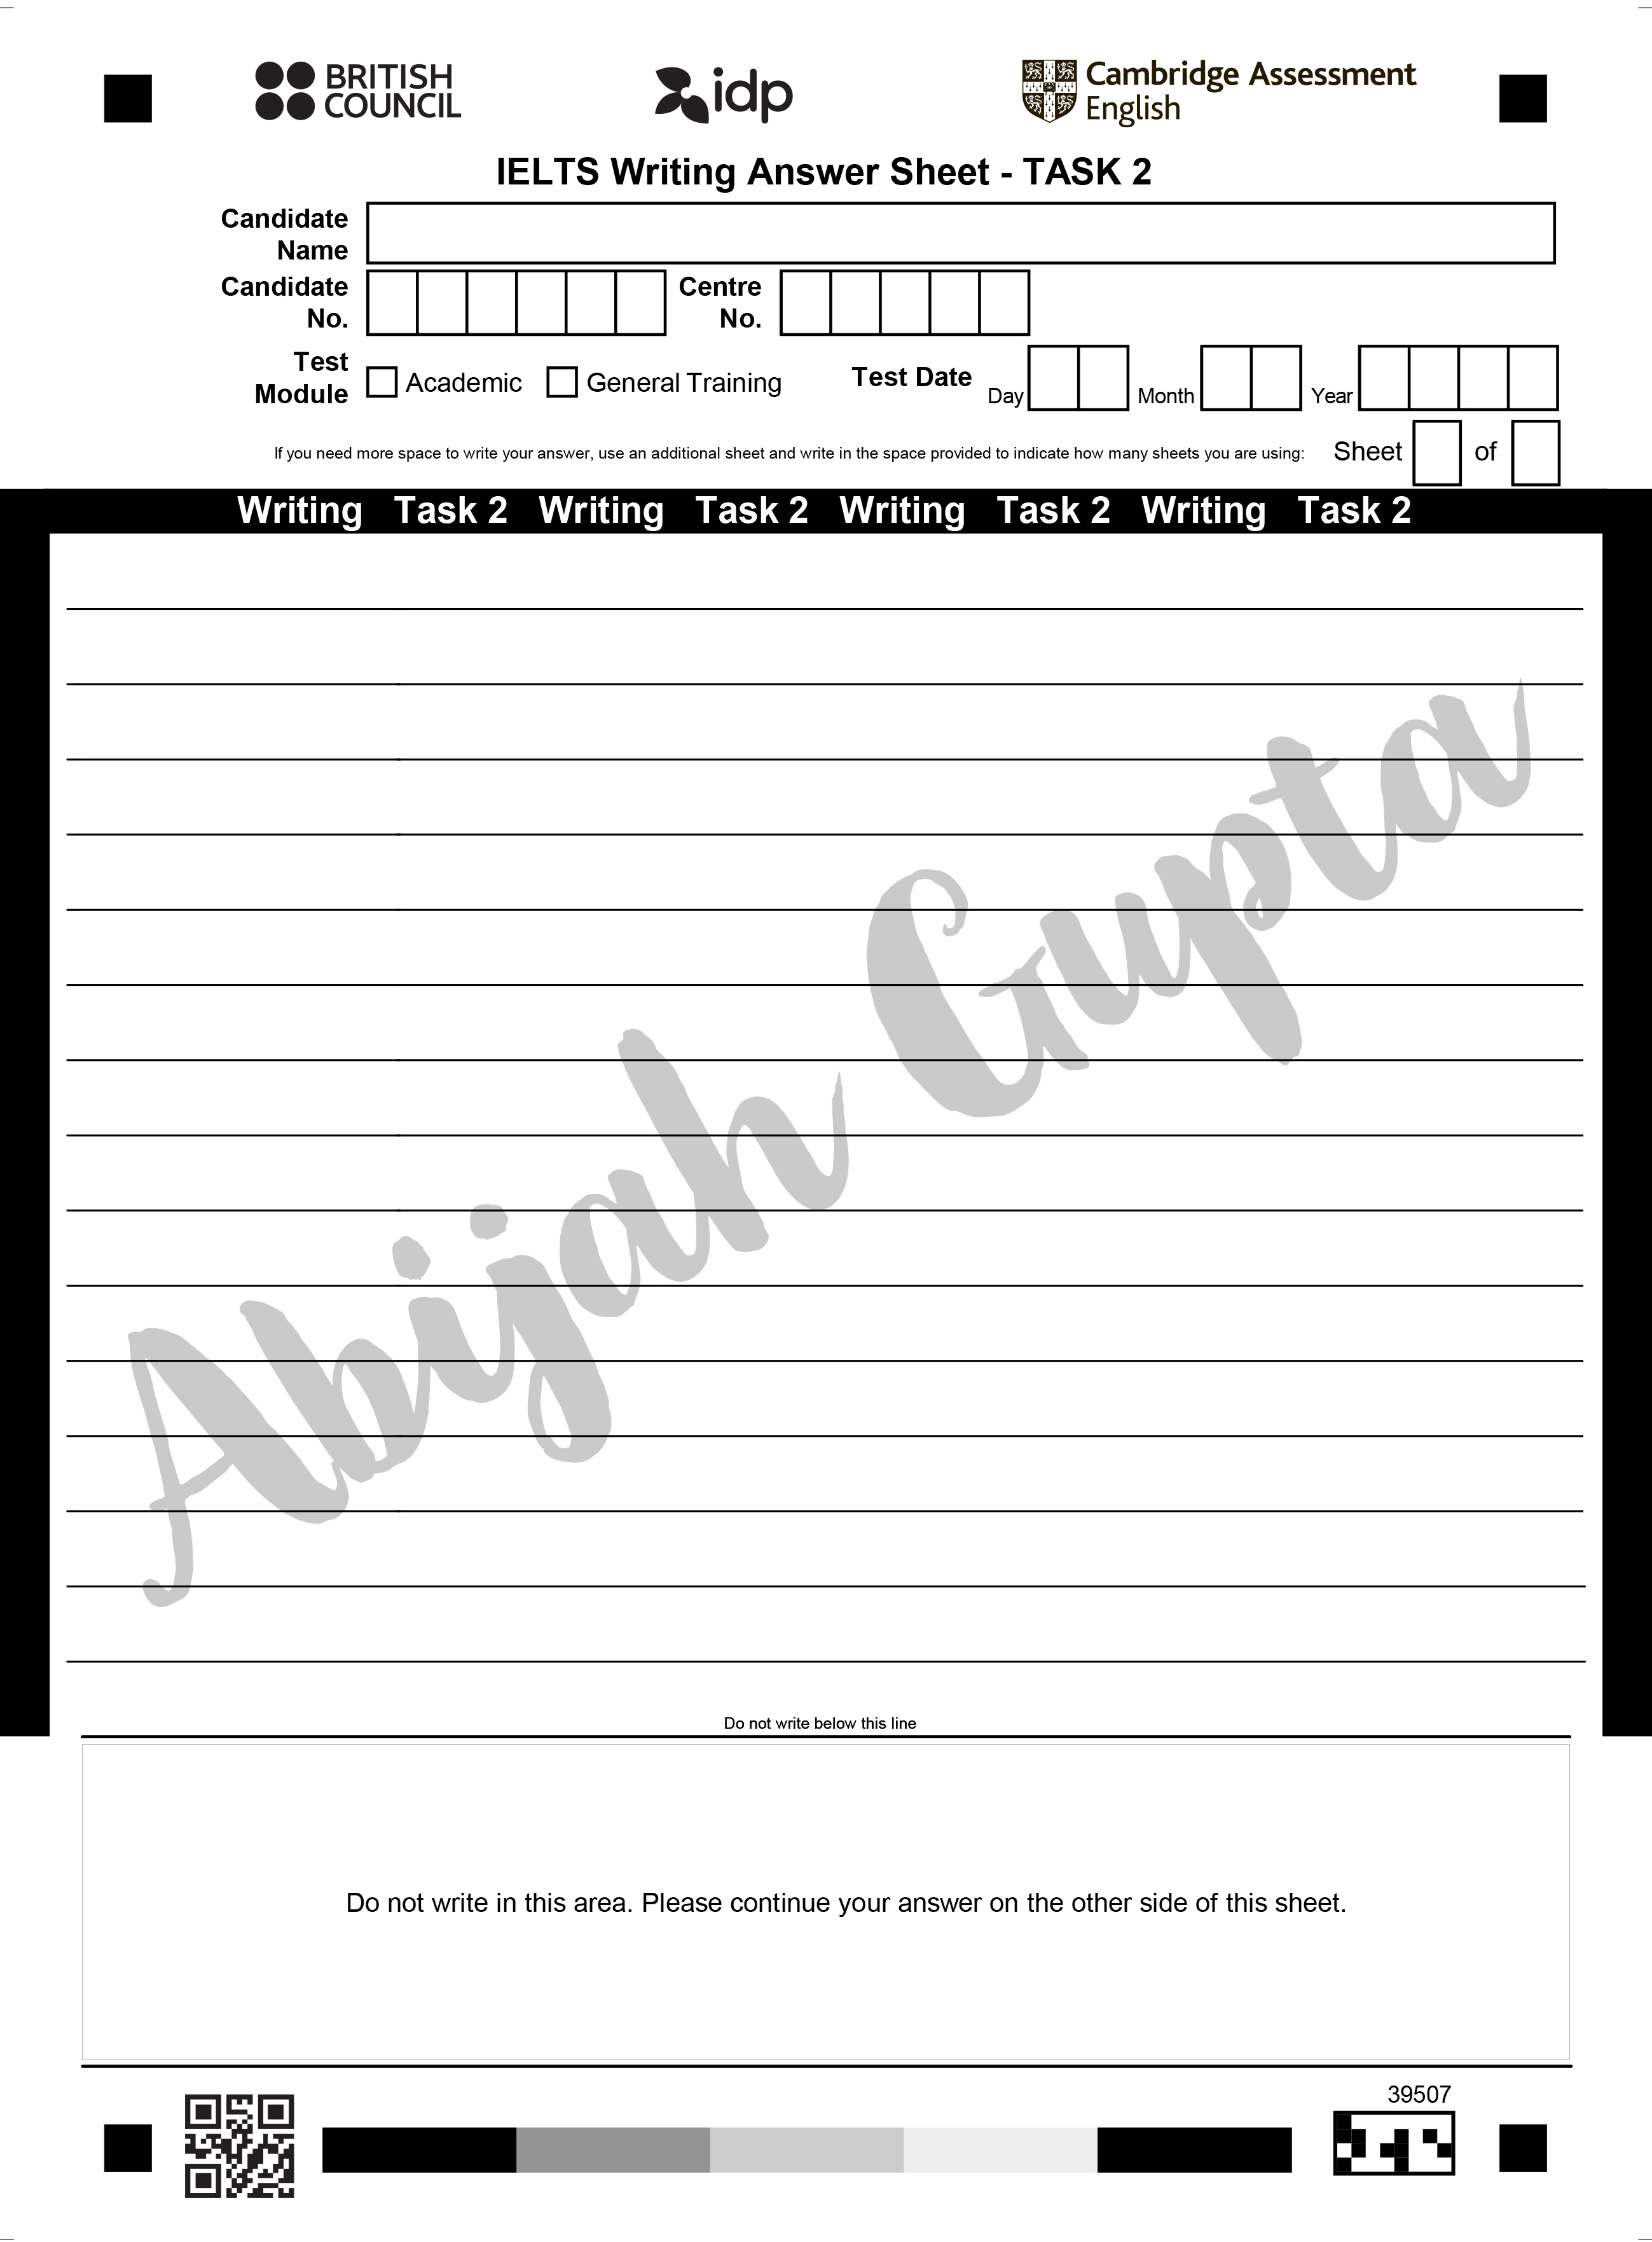 IELTS Writing - Sample Sheet Explained - Task 2